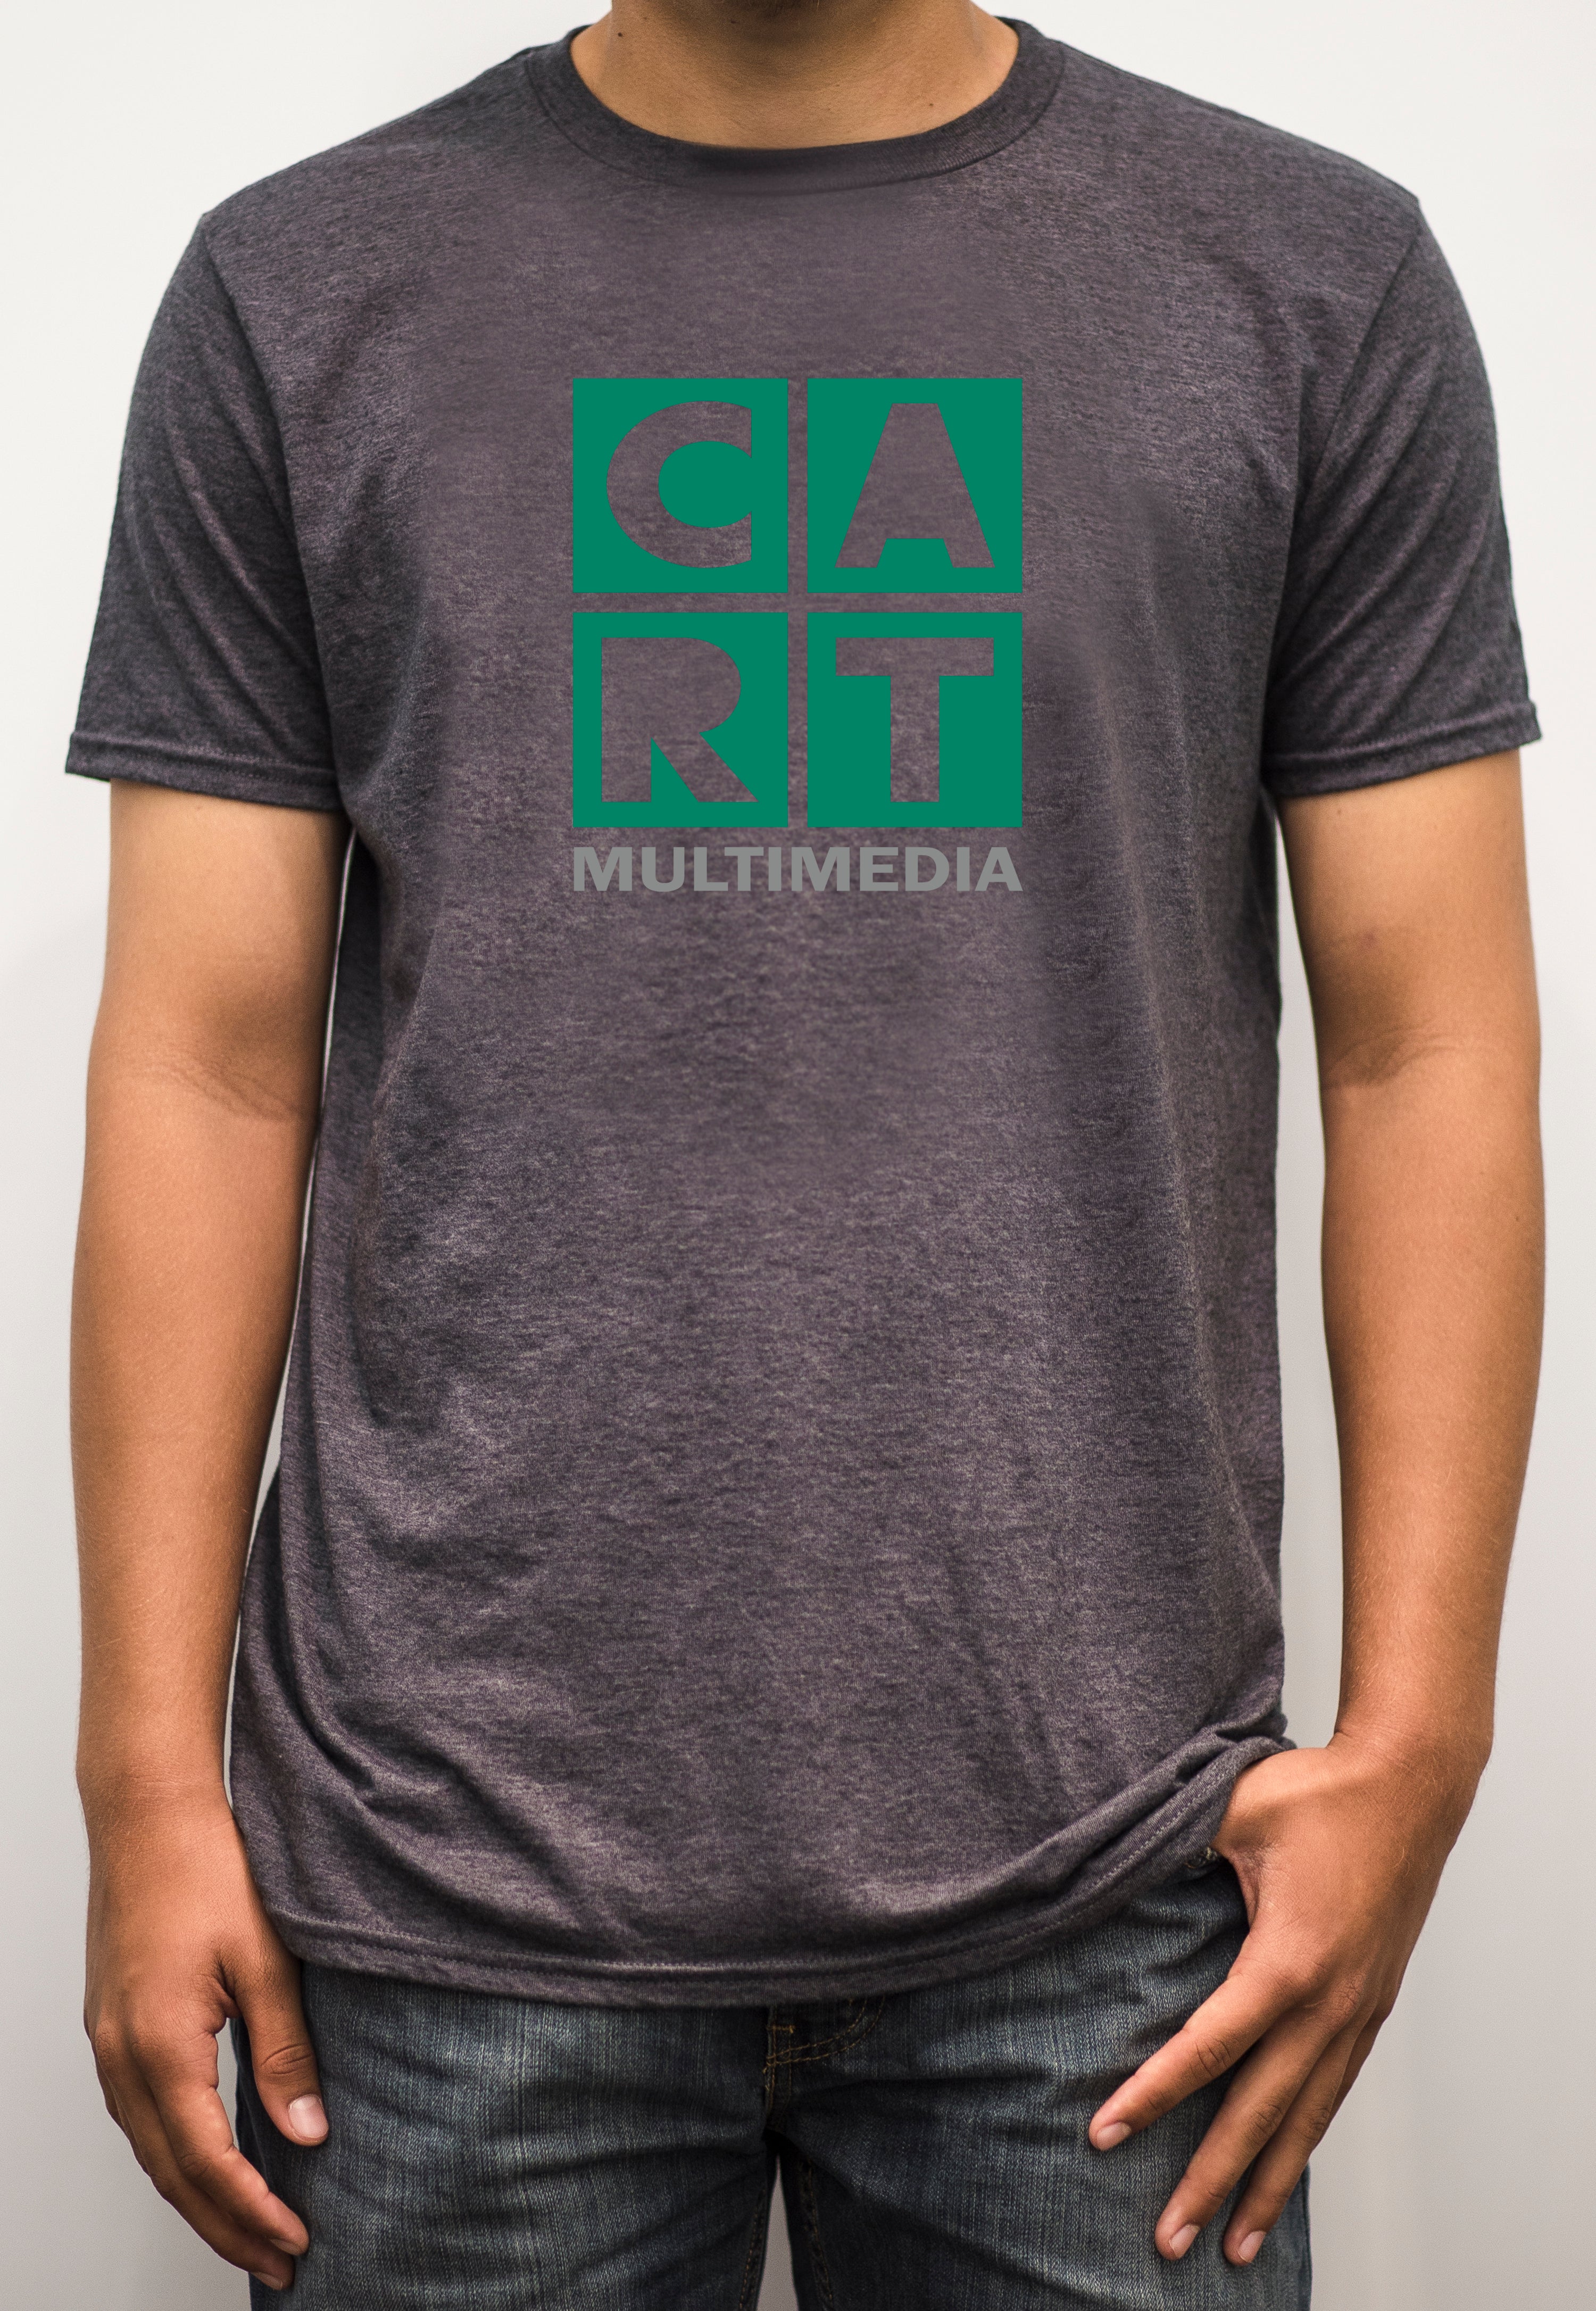 Short sleeve t-shirt - multimedia grey/green